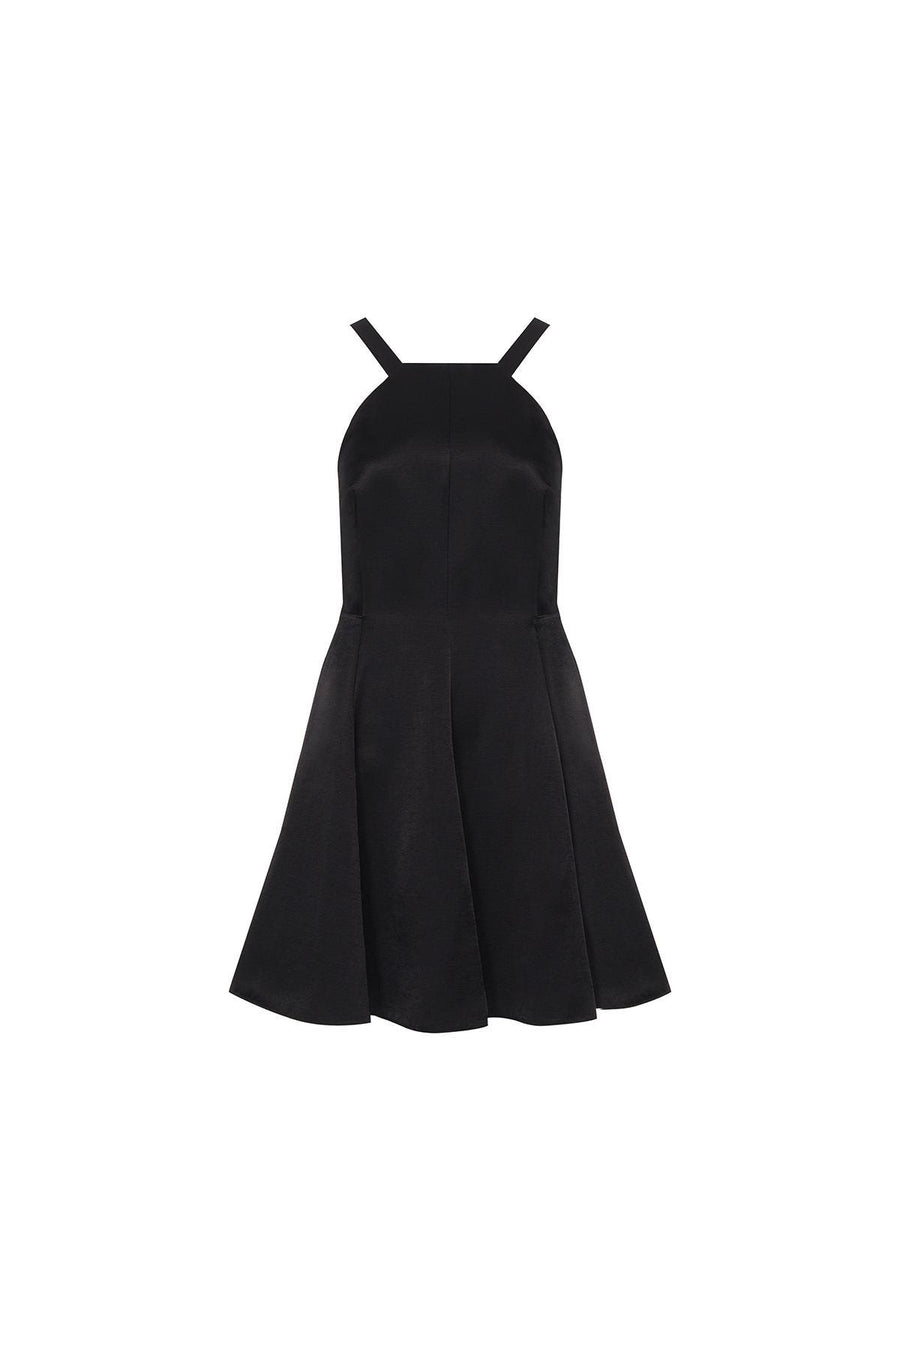 RUE Les Createurs Black Short Dress with Thin Straps & Pockets - Porterist 6